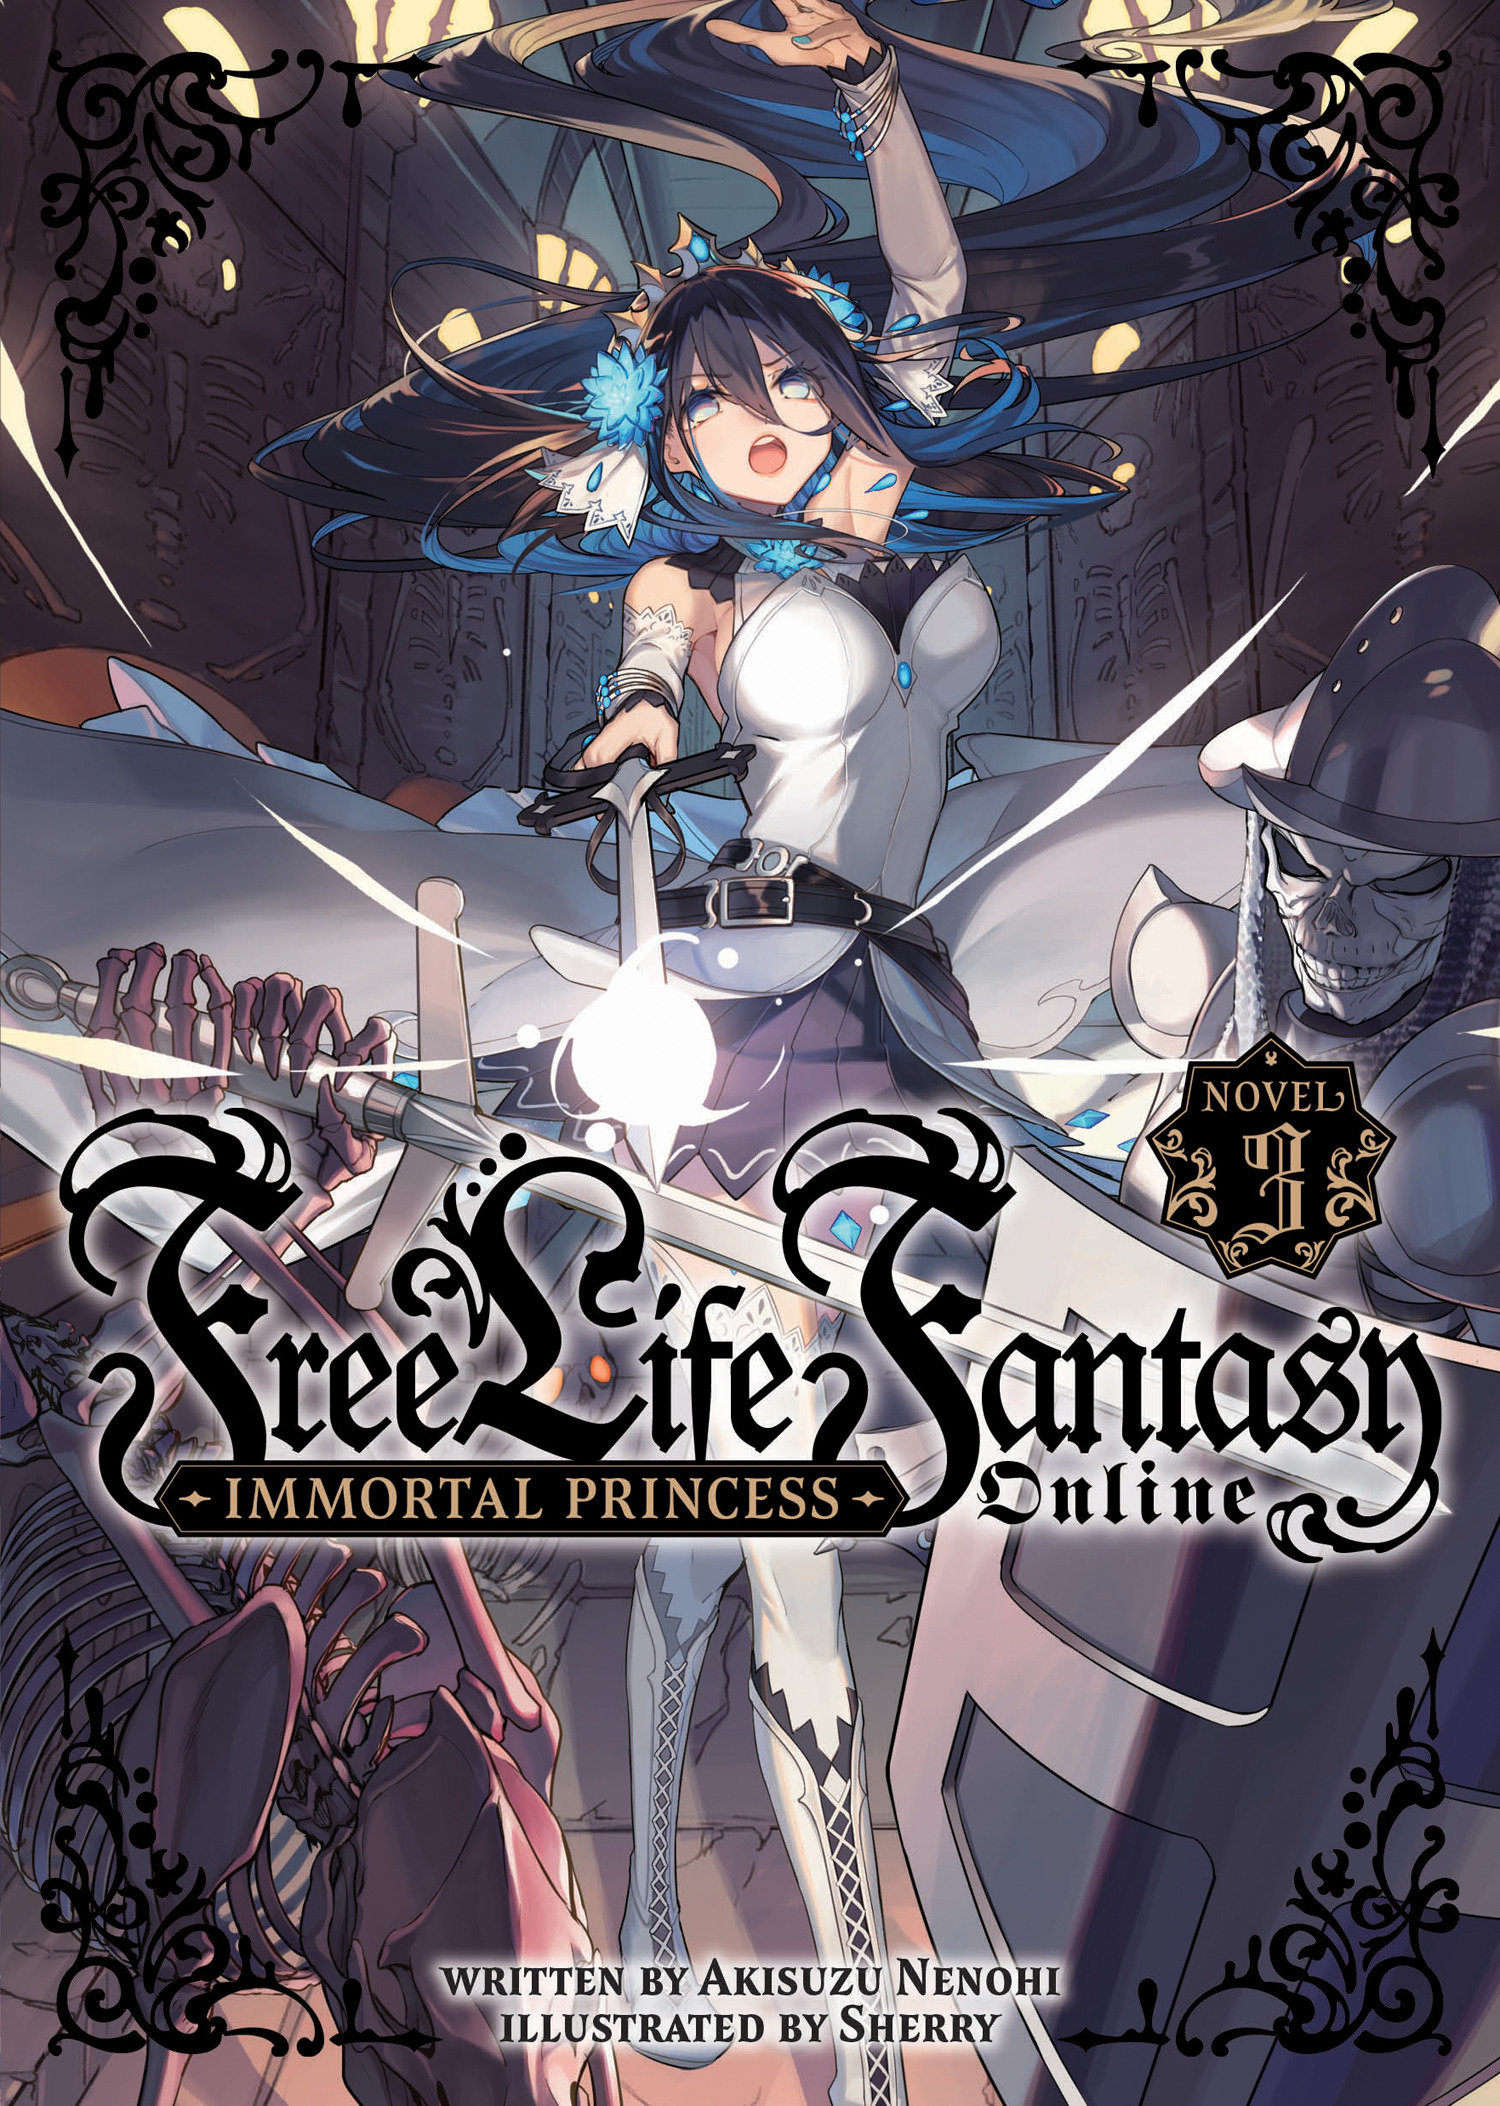 Free Life Fantasy Online: Immortal Princess Light Novel Volume 3